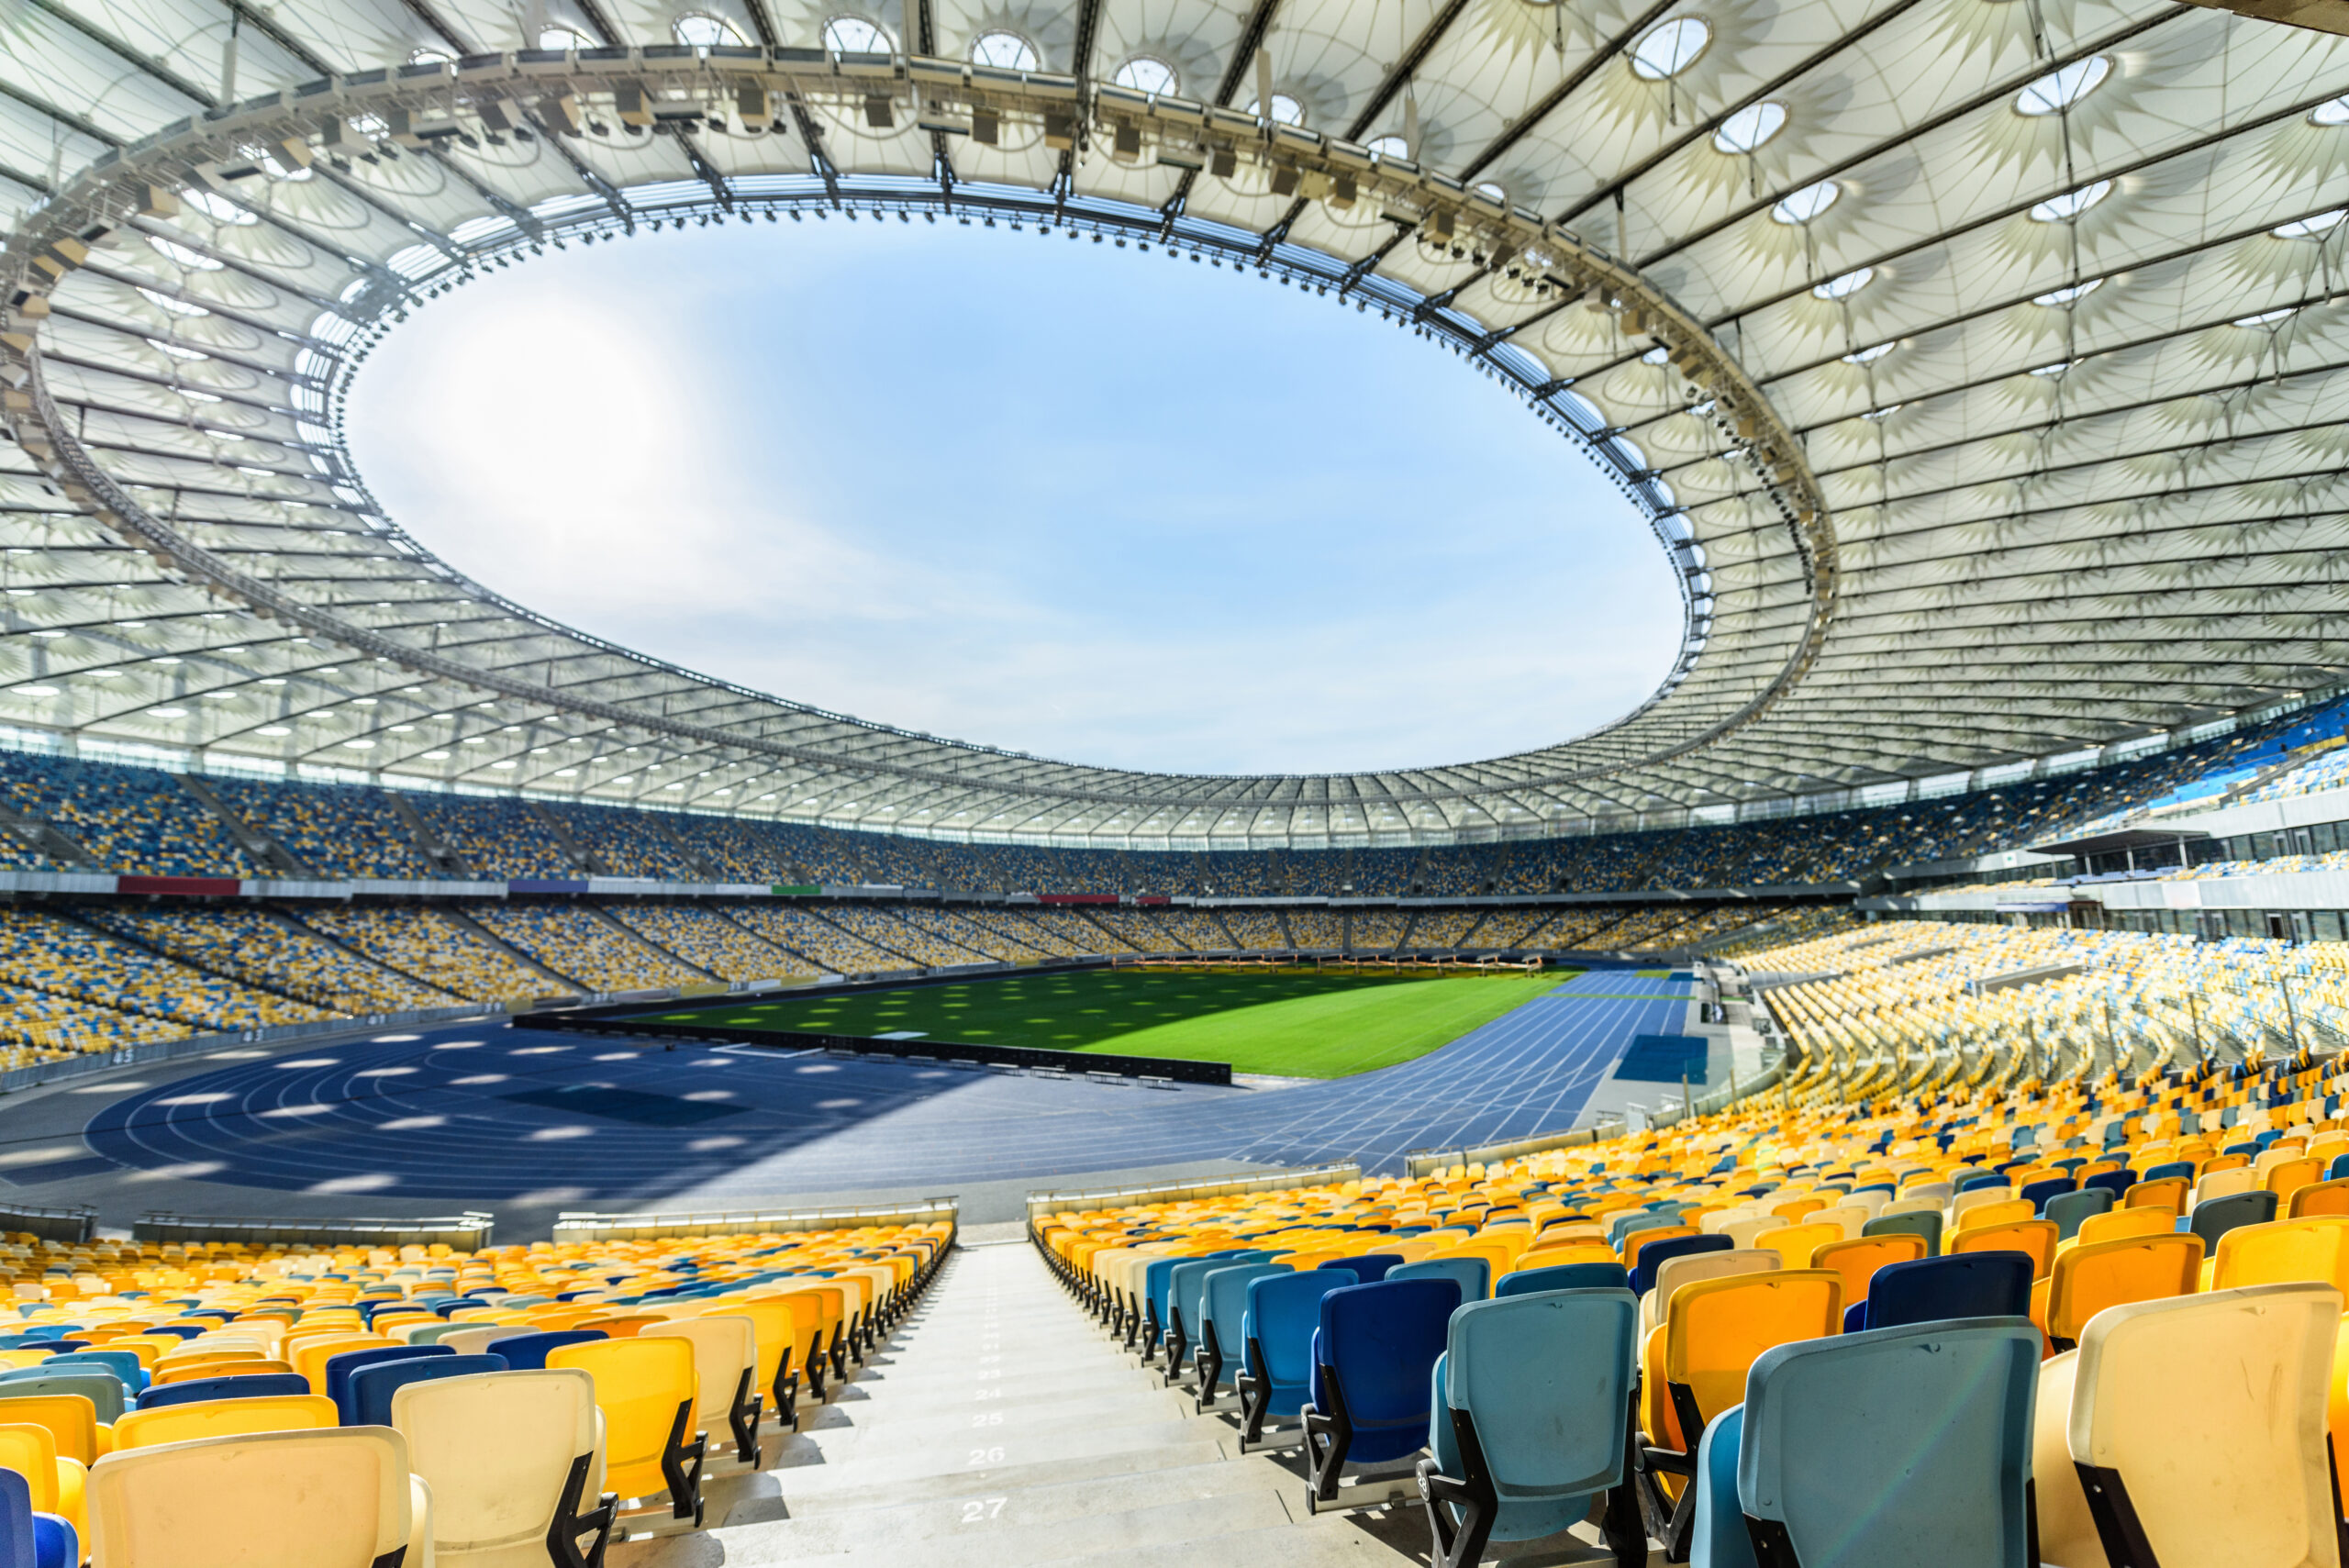 rows of yellow and blue stadium seats on soccer field stadium